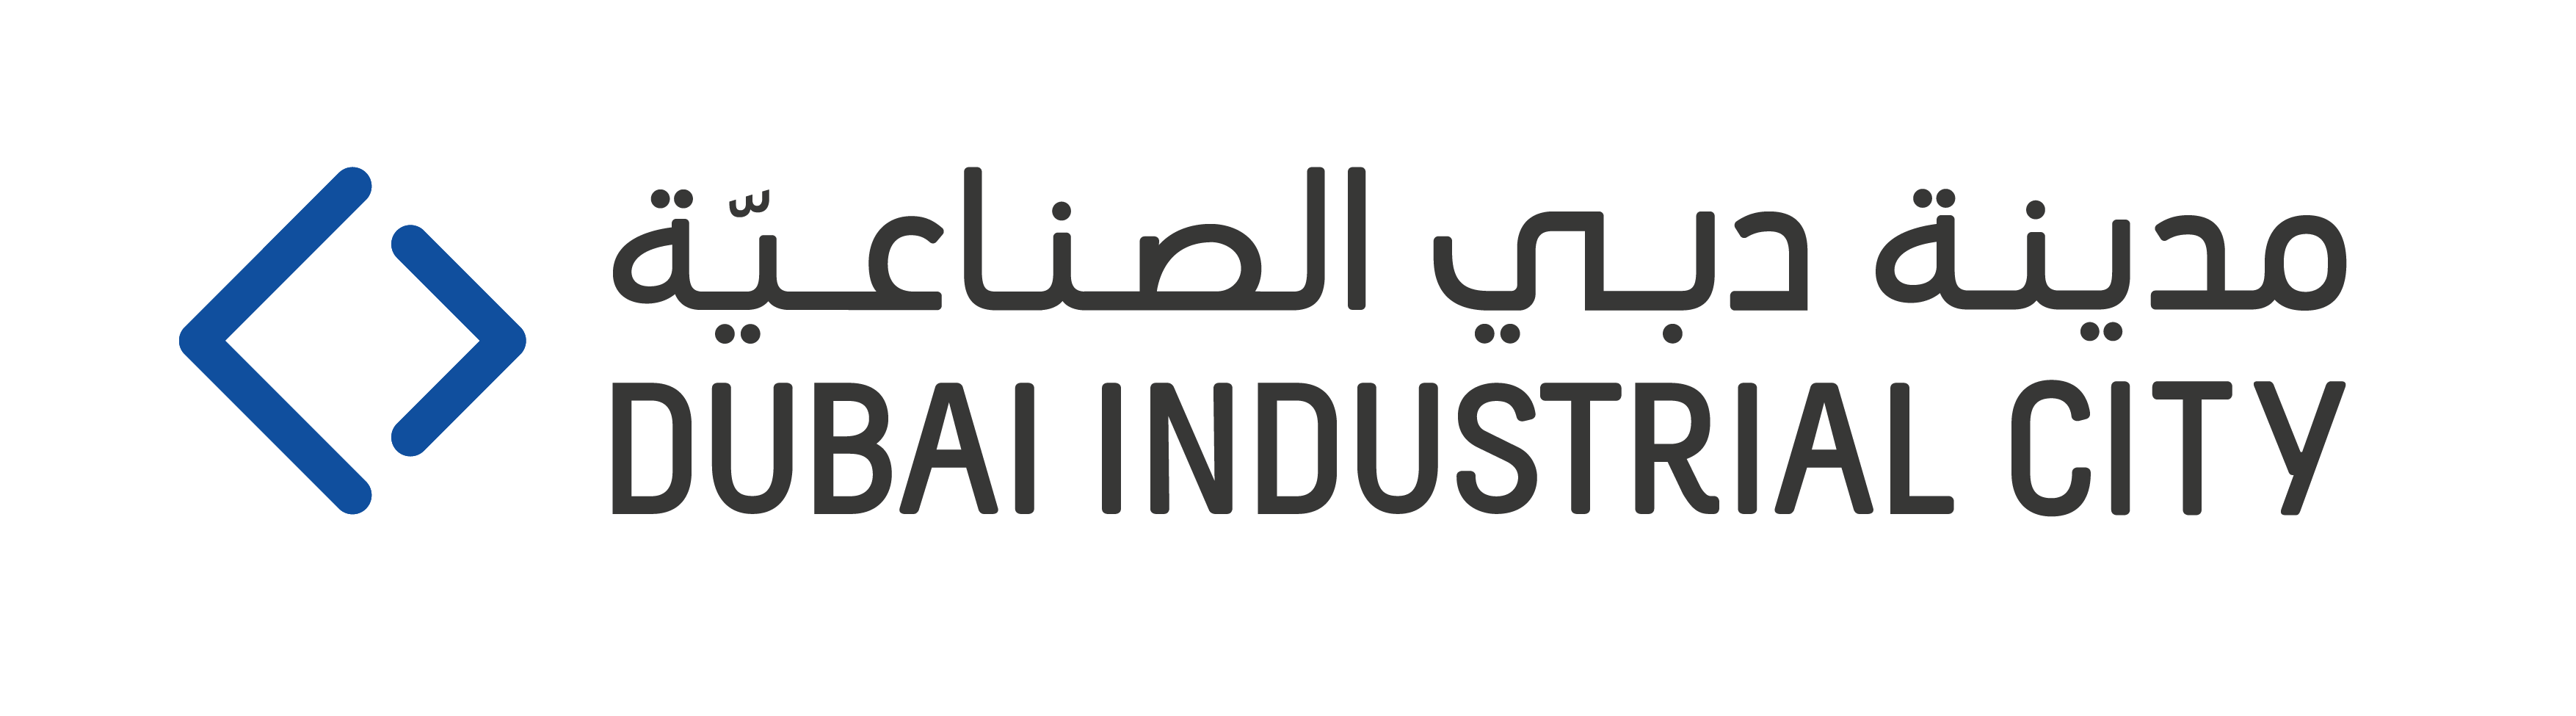 Dubai Industrial City 